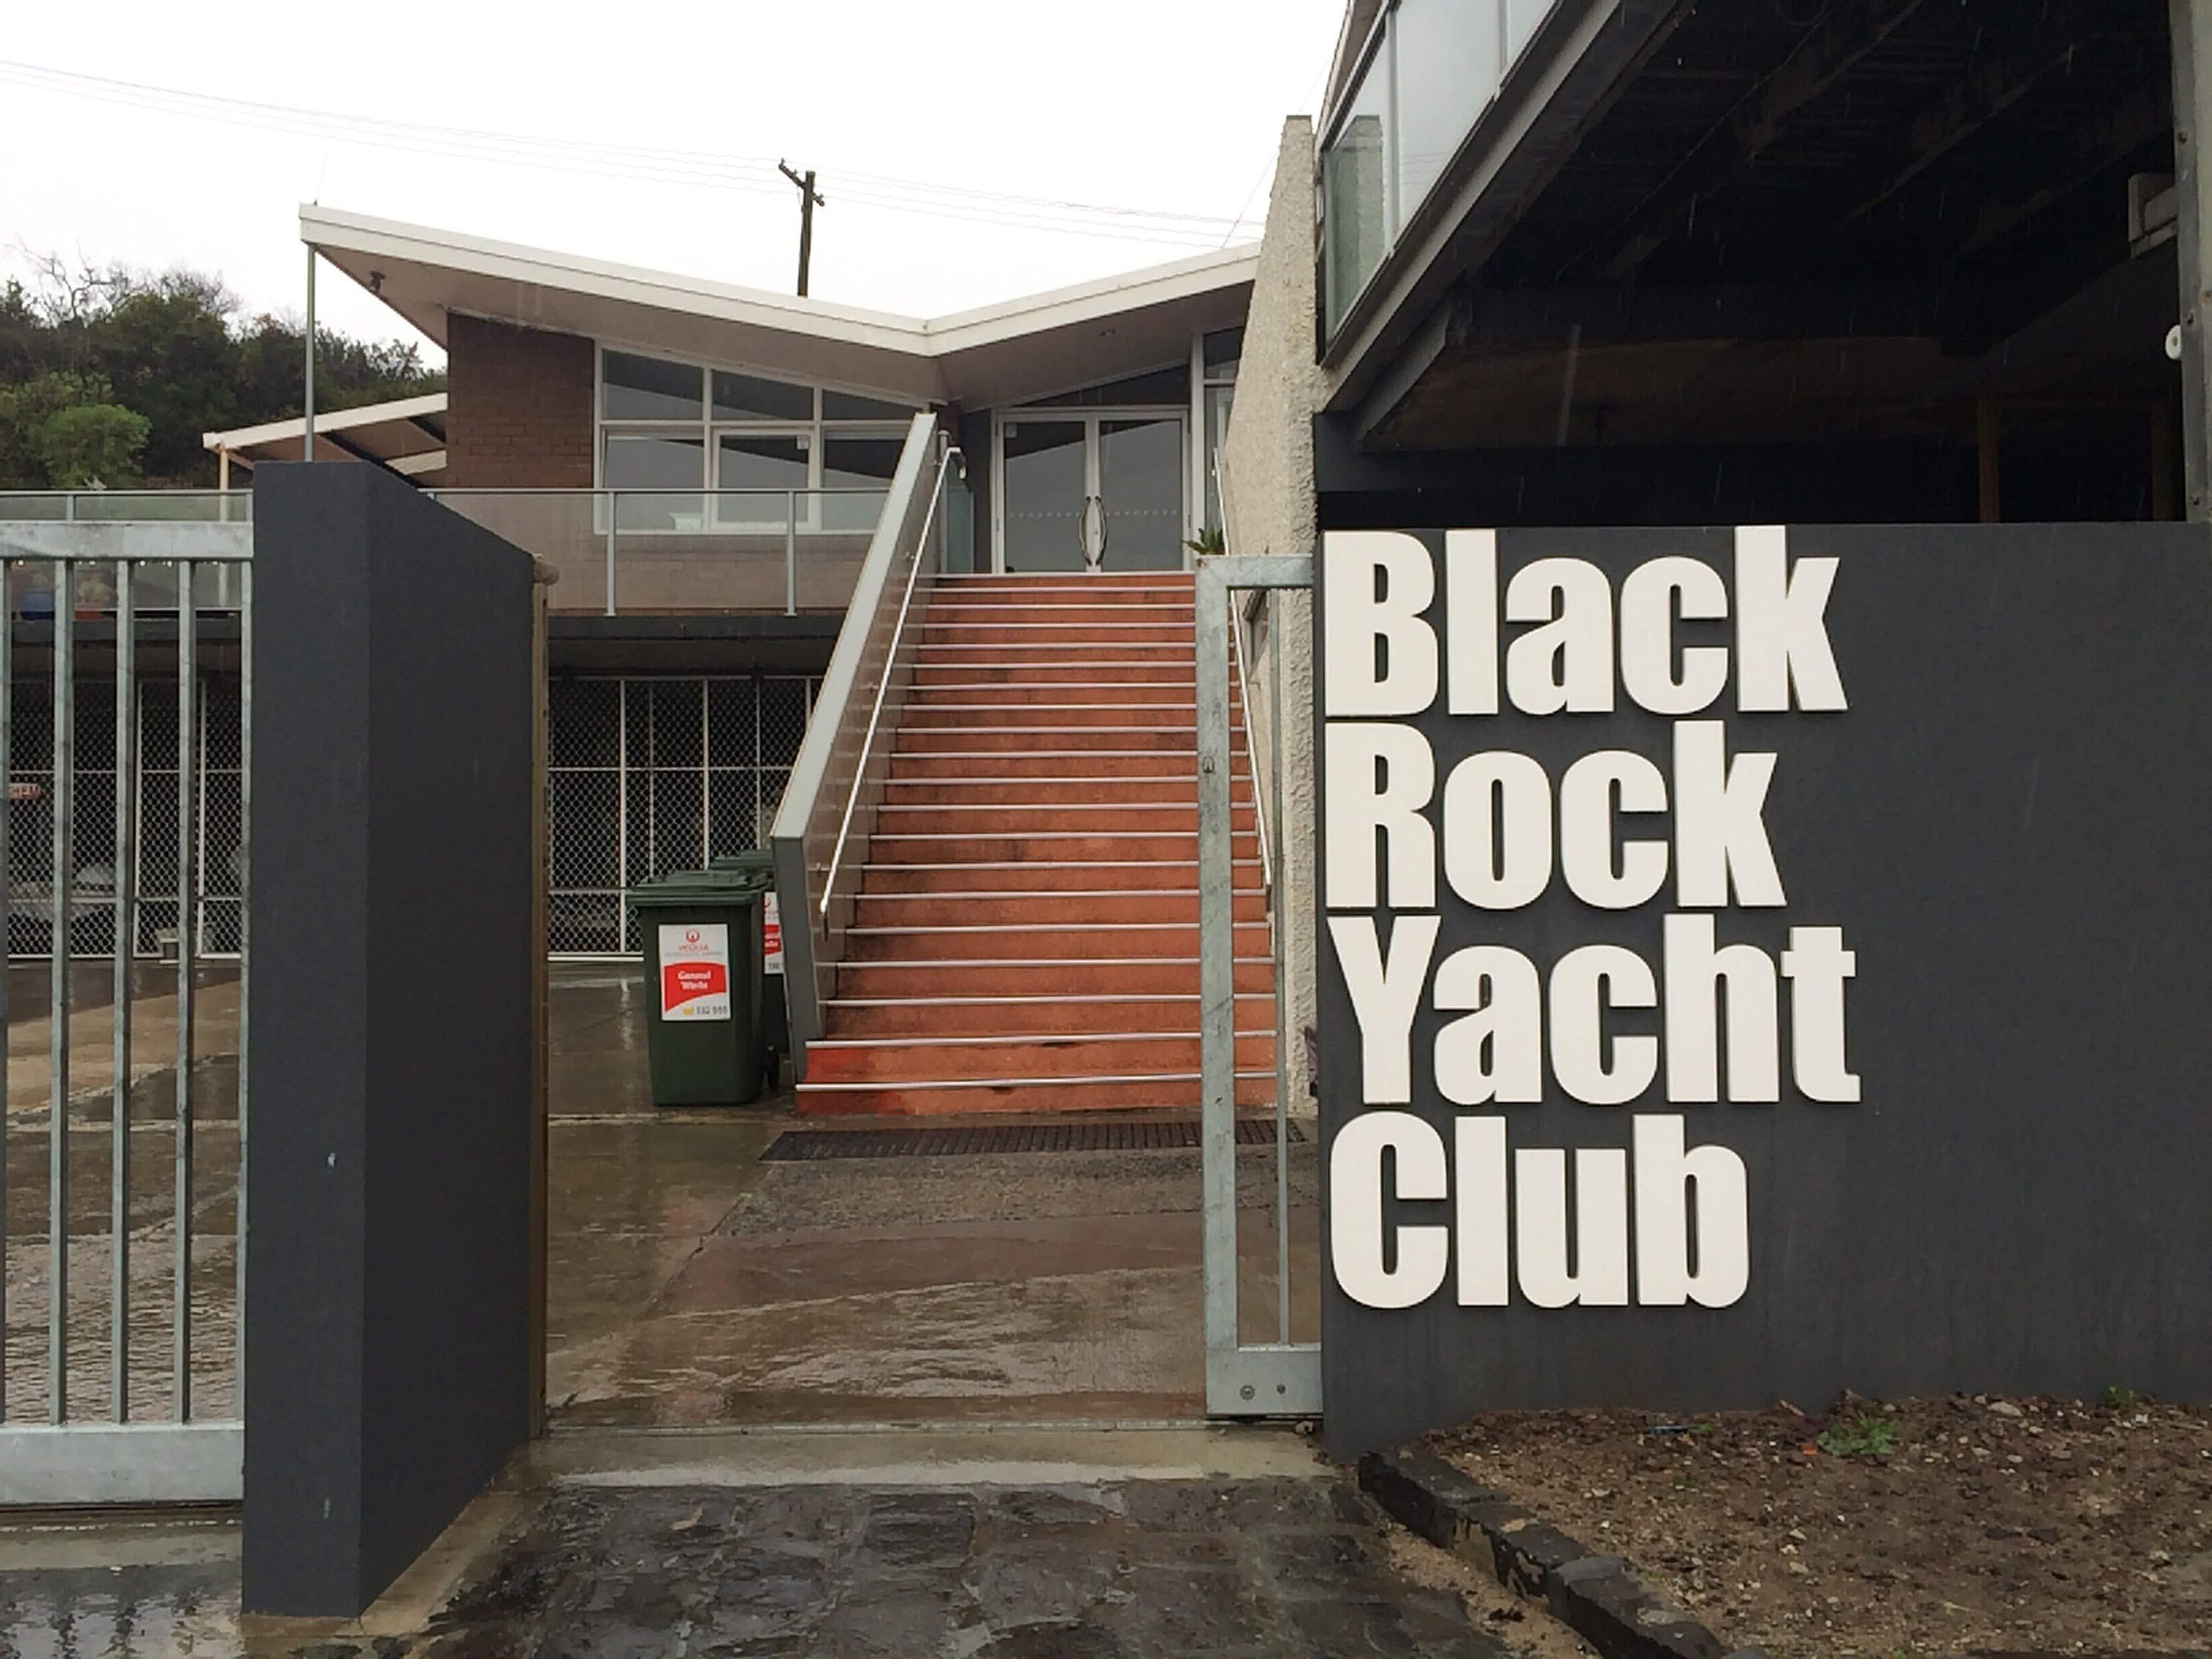 yacht clubs melbourne australia